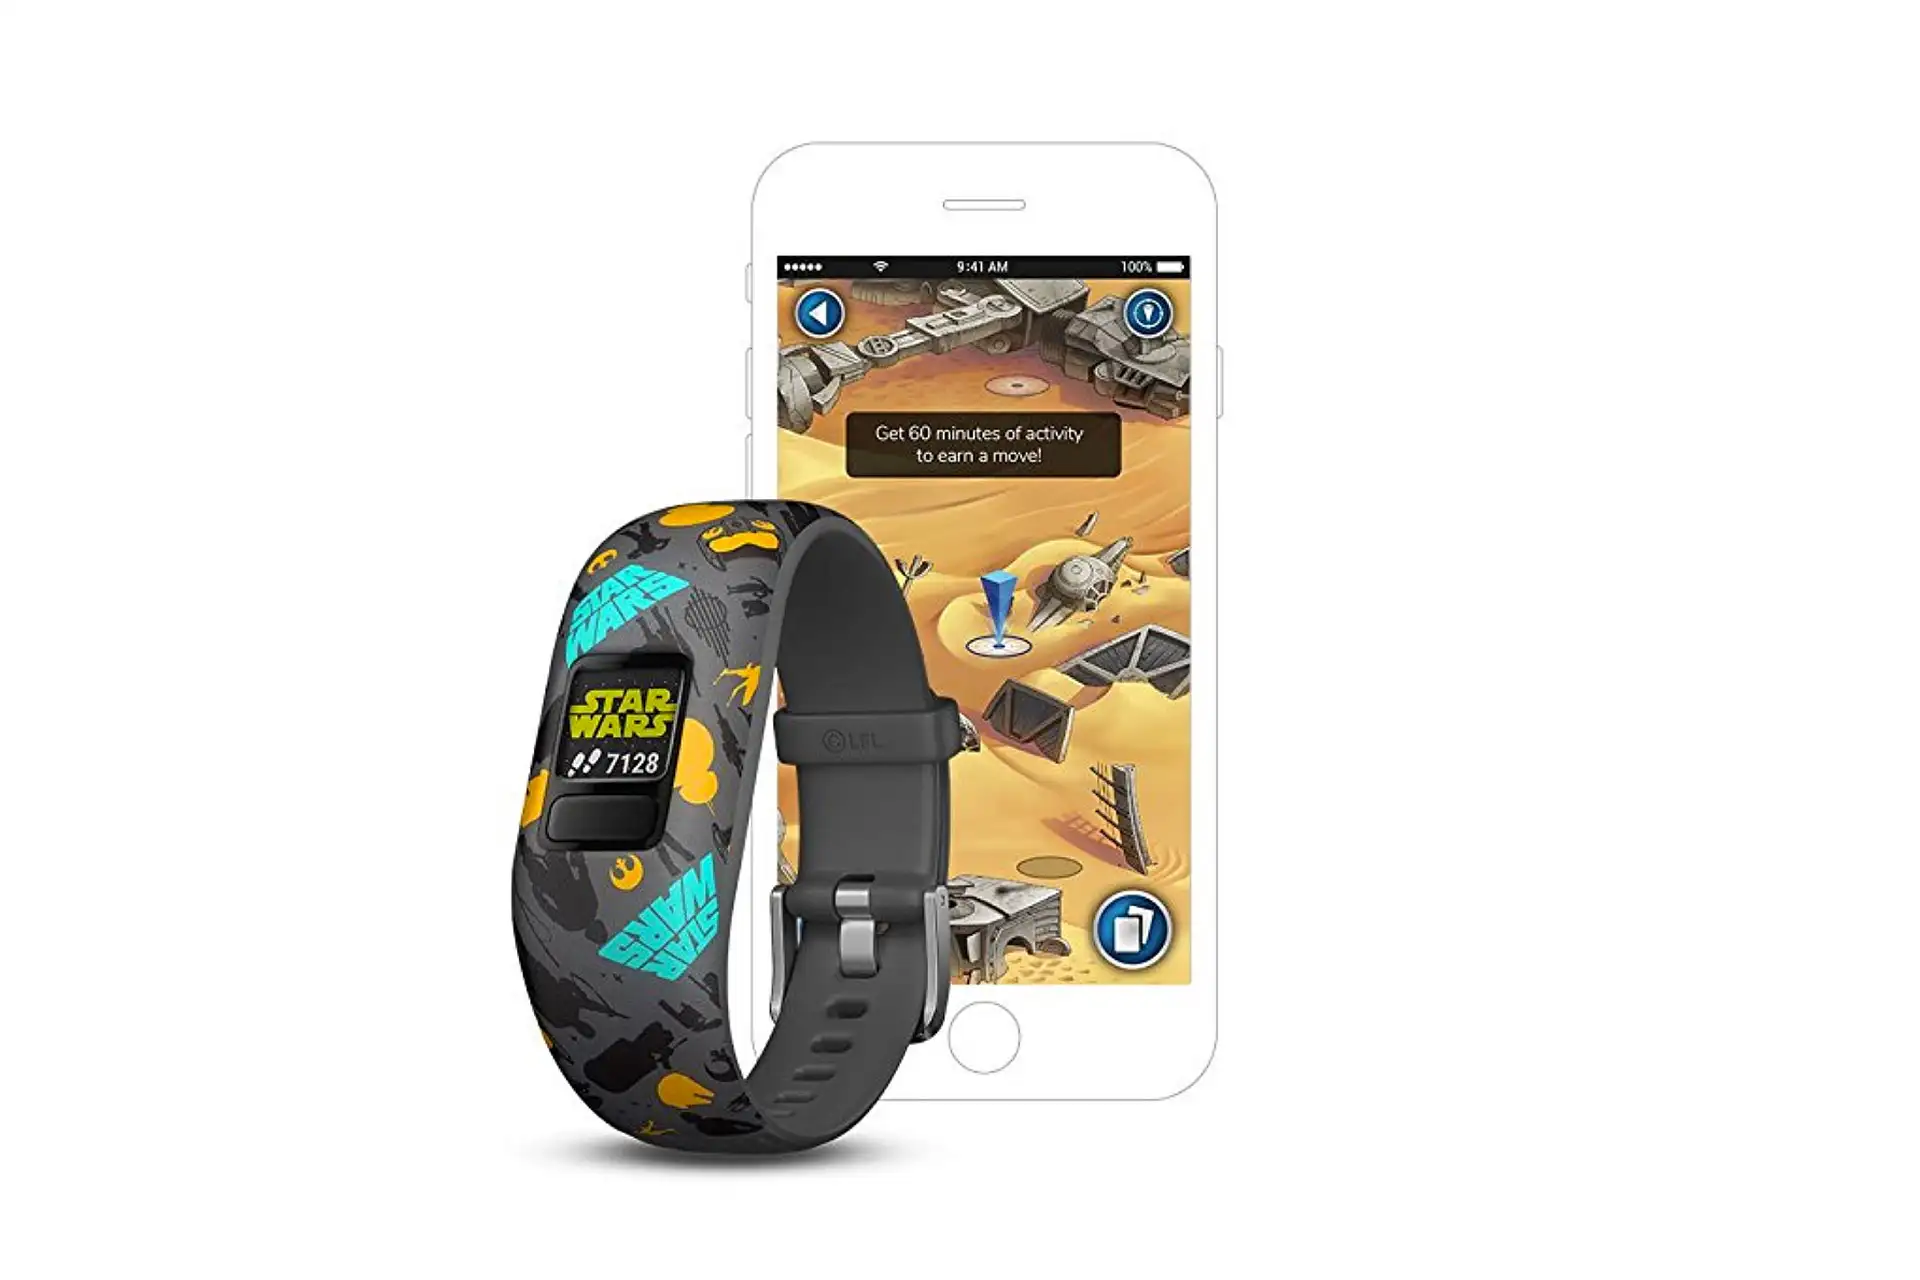 Garmin Star Wars Fitness Tracker; Courtesy of Amazon